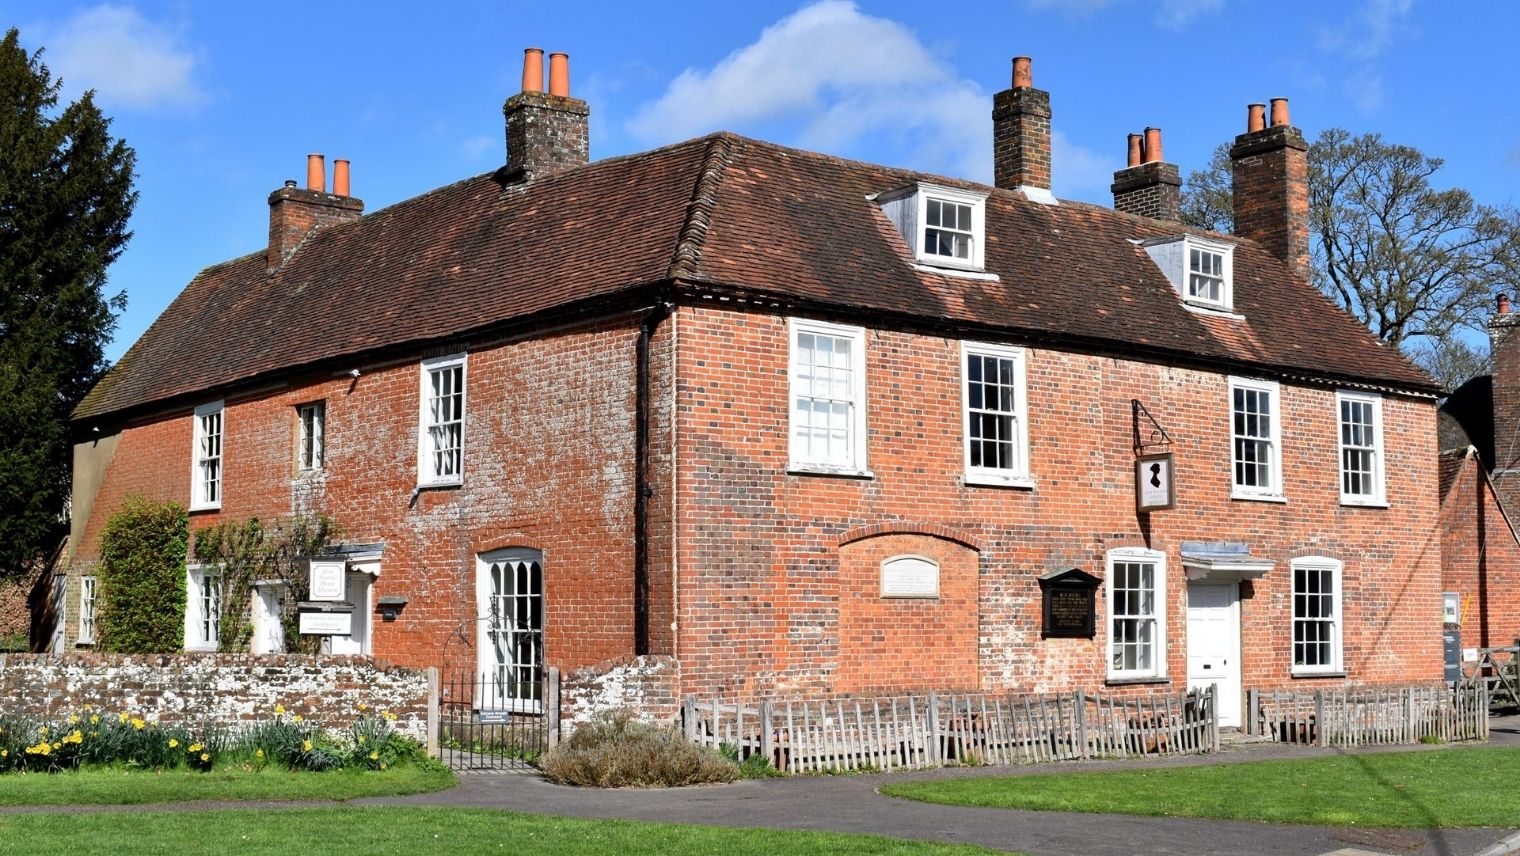 Exterior of Jane Austen's house